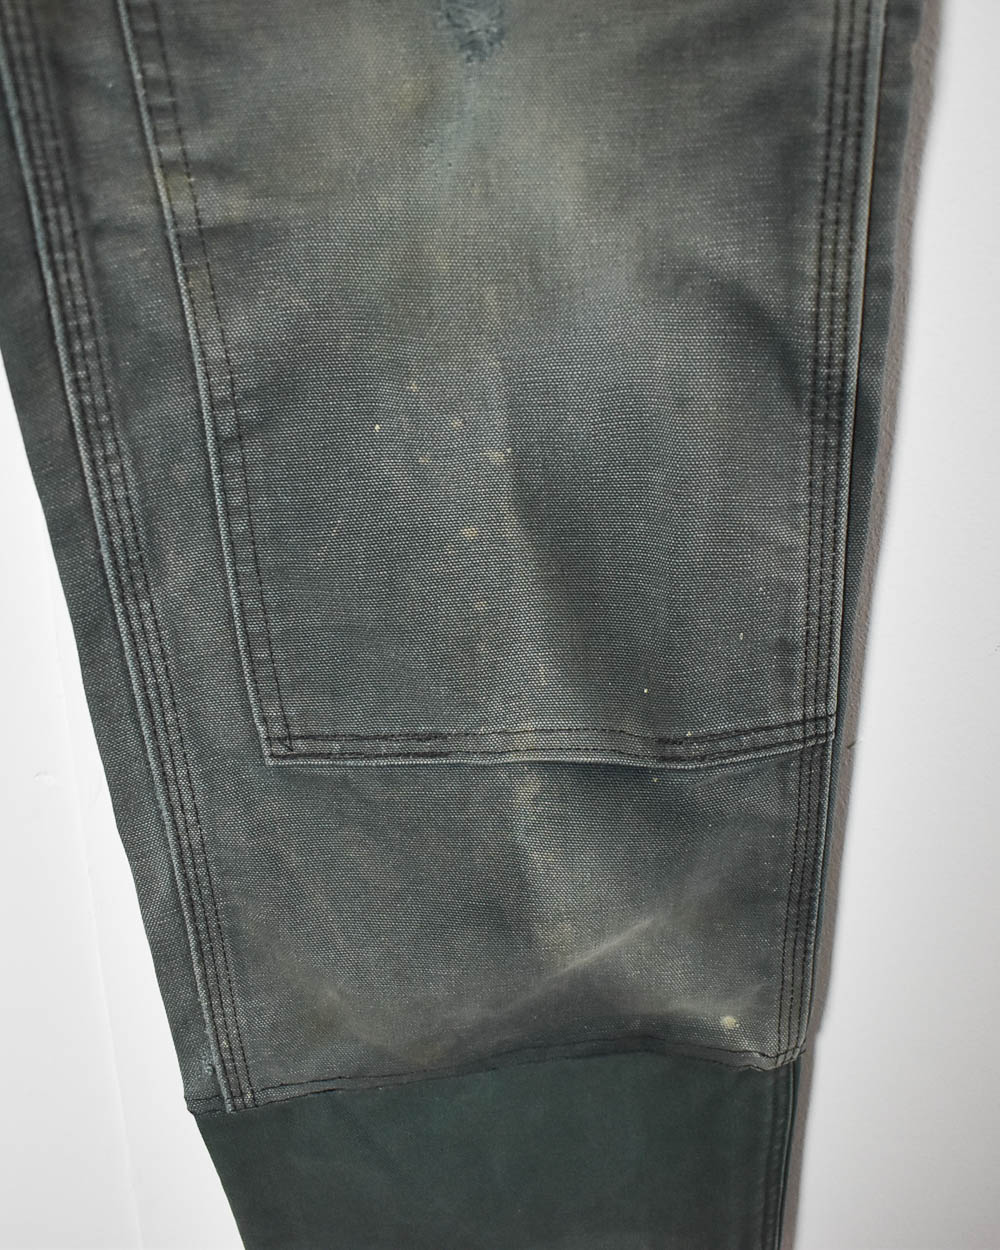 Black Carhartt Distressed Double Knee Carpenter Jeans - W30 L30